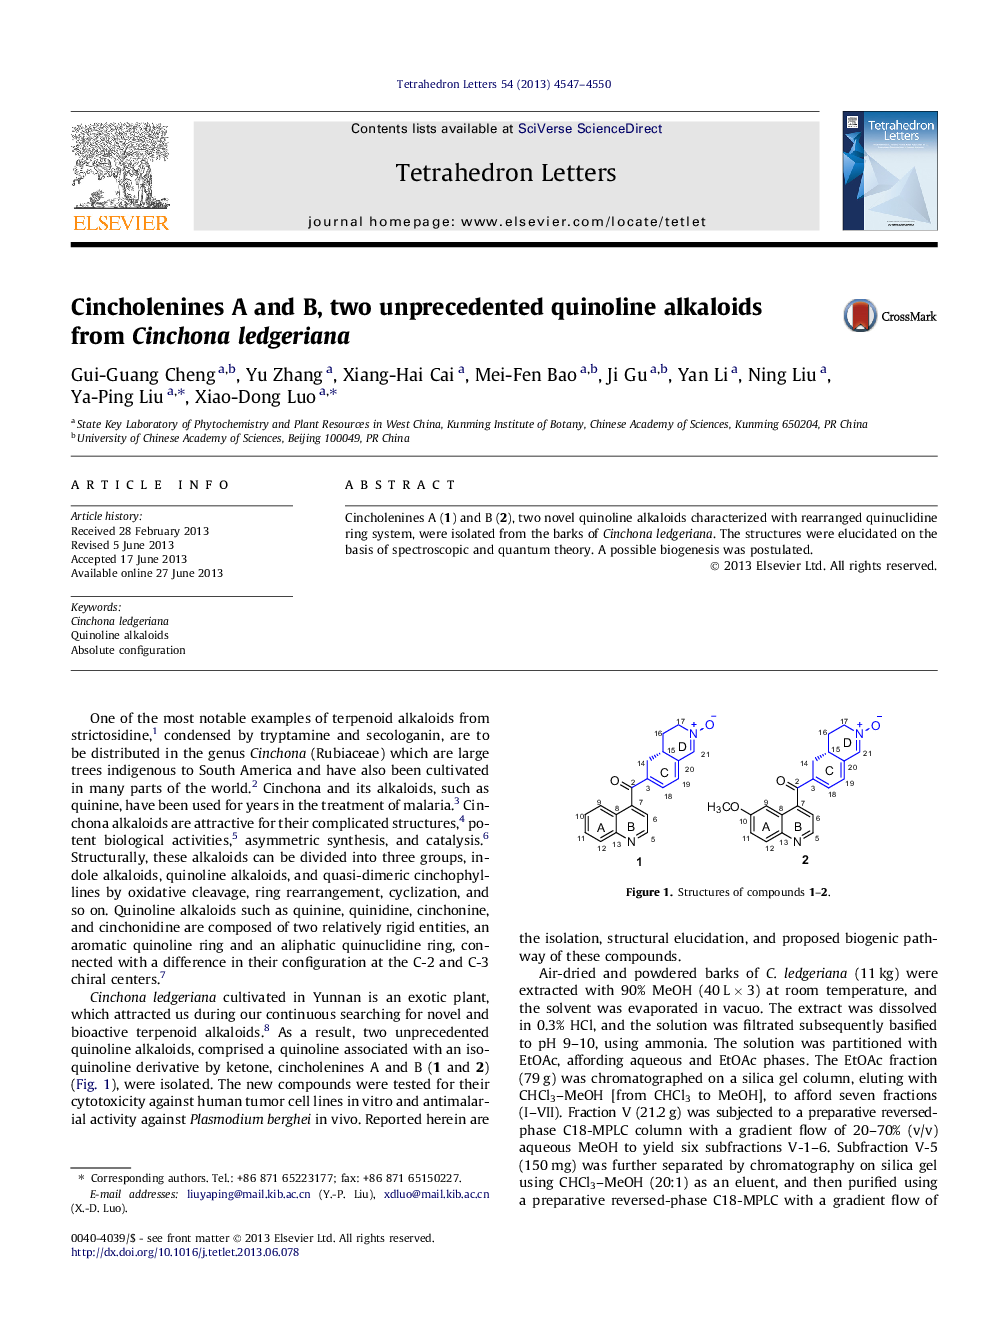 Cincholenines A and B, two unprecedented quinoline alkaloids from Cinchona ledgeriana